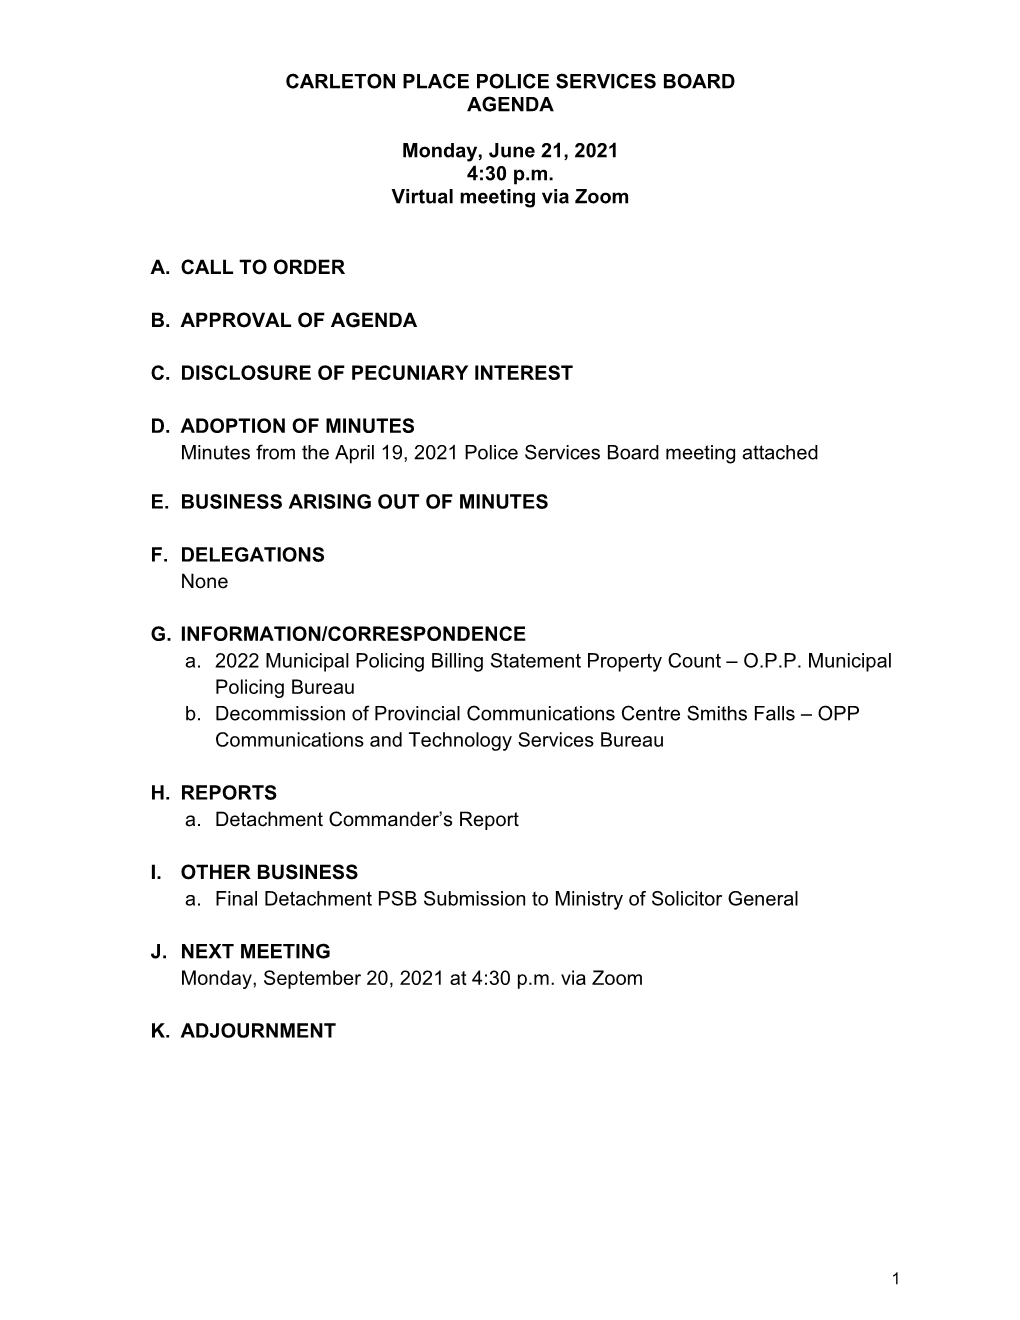 Carleton Place Police Services Board Agenda